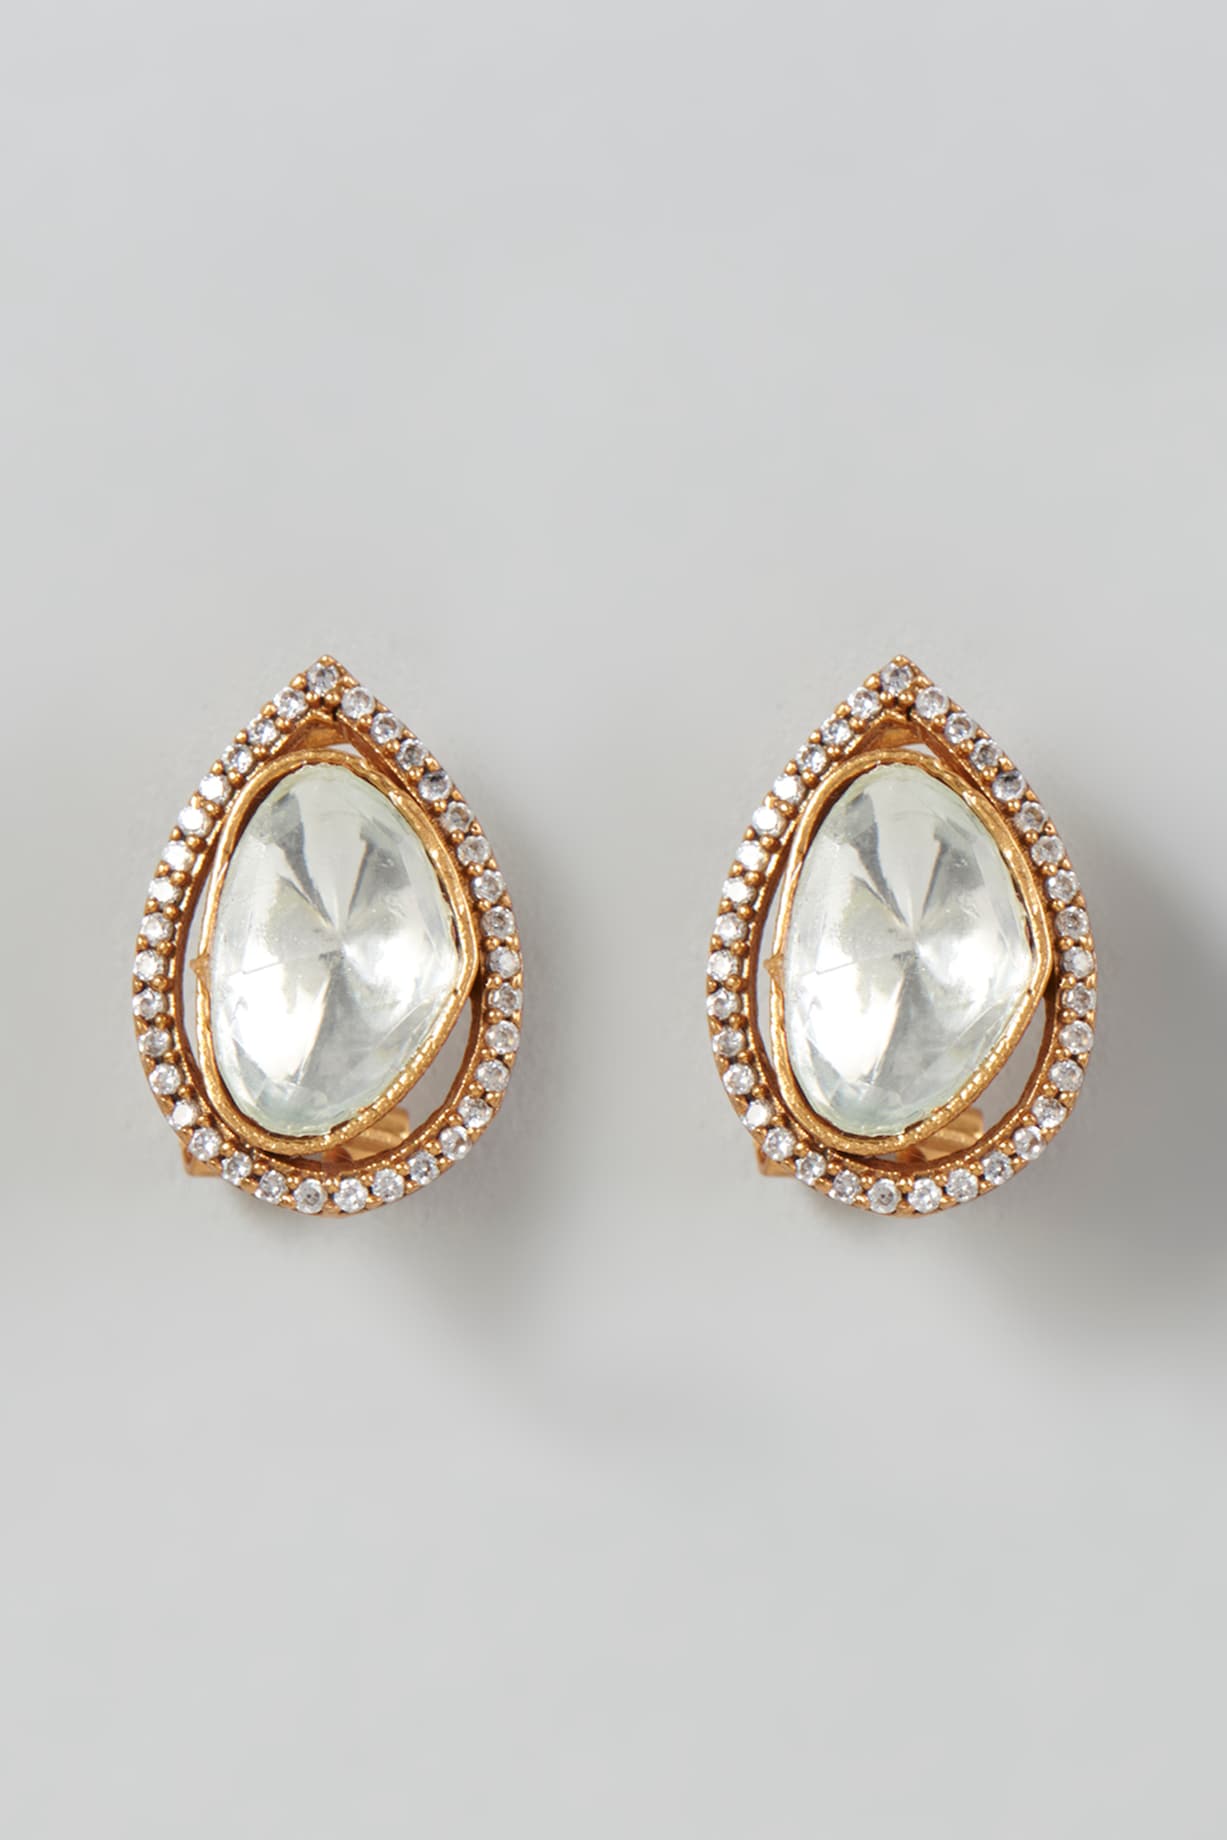 Two Tone Finish Kundan Dangler Earrings Design by Zerokaata Jewellery at  Pernia's Pop Up Shop 2024